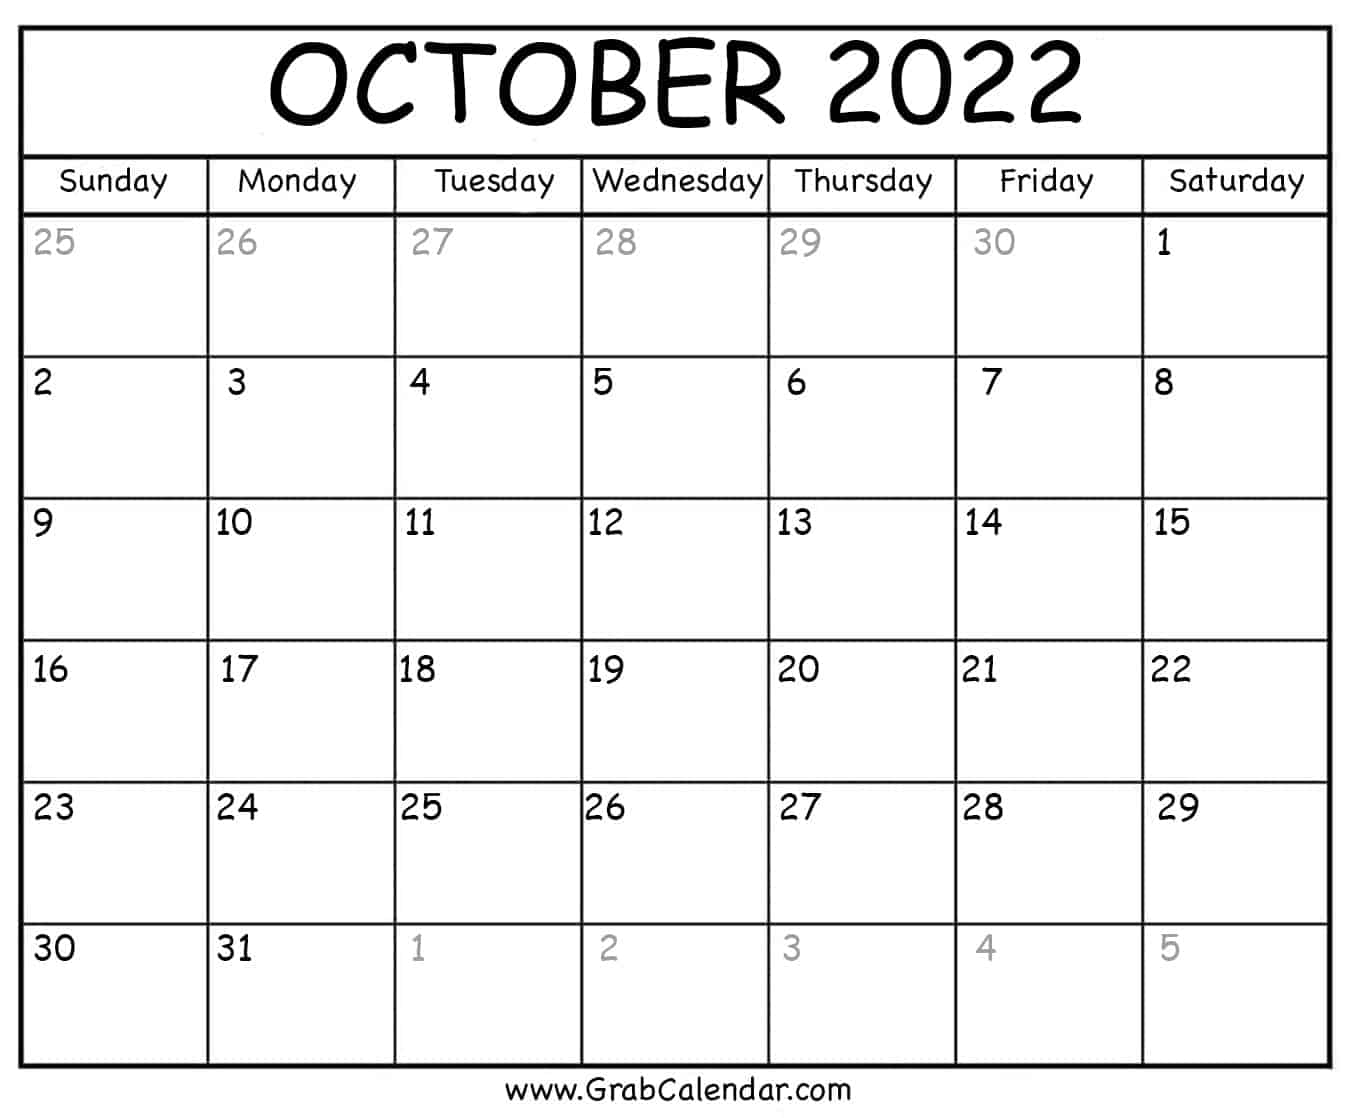 October 2022 Calendar With Holidays Printable October 2022 Calendar